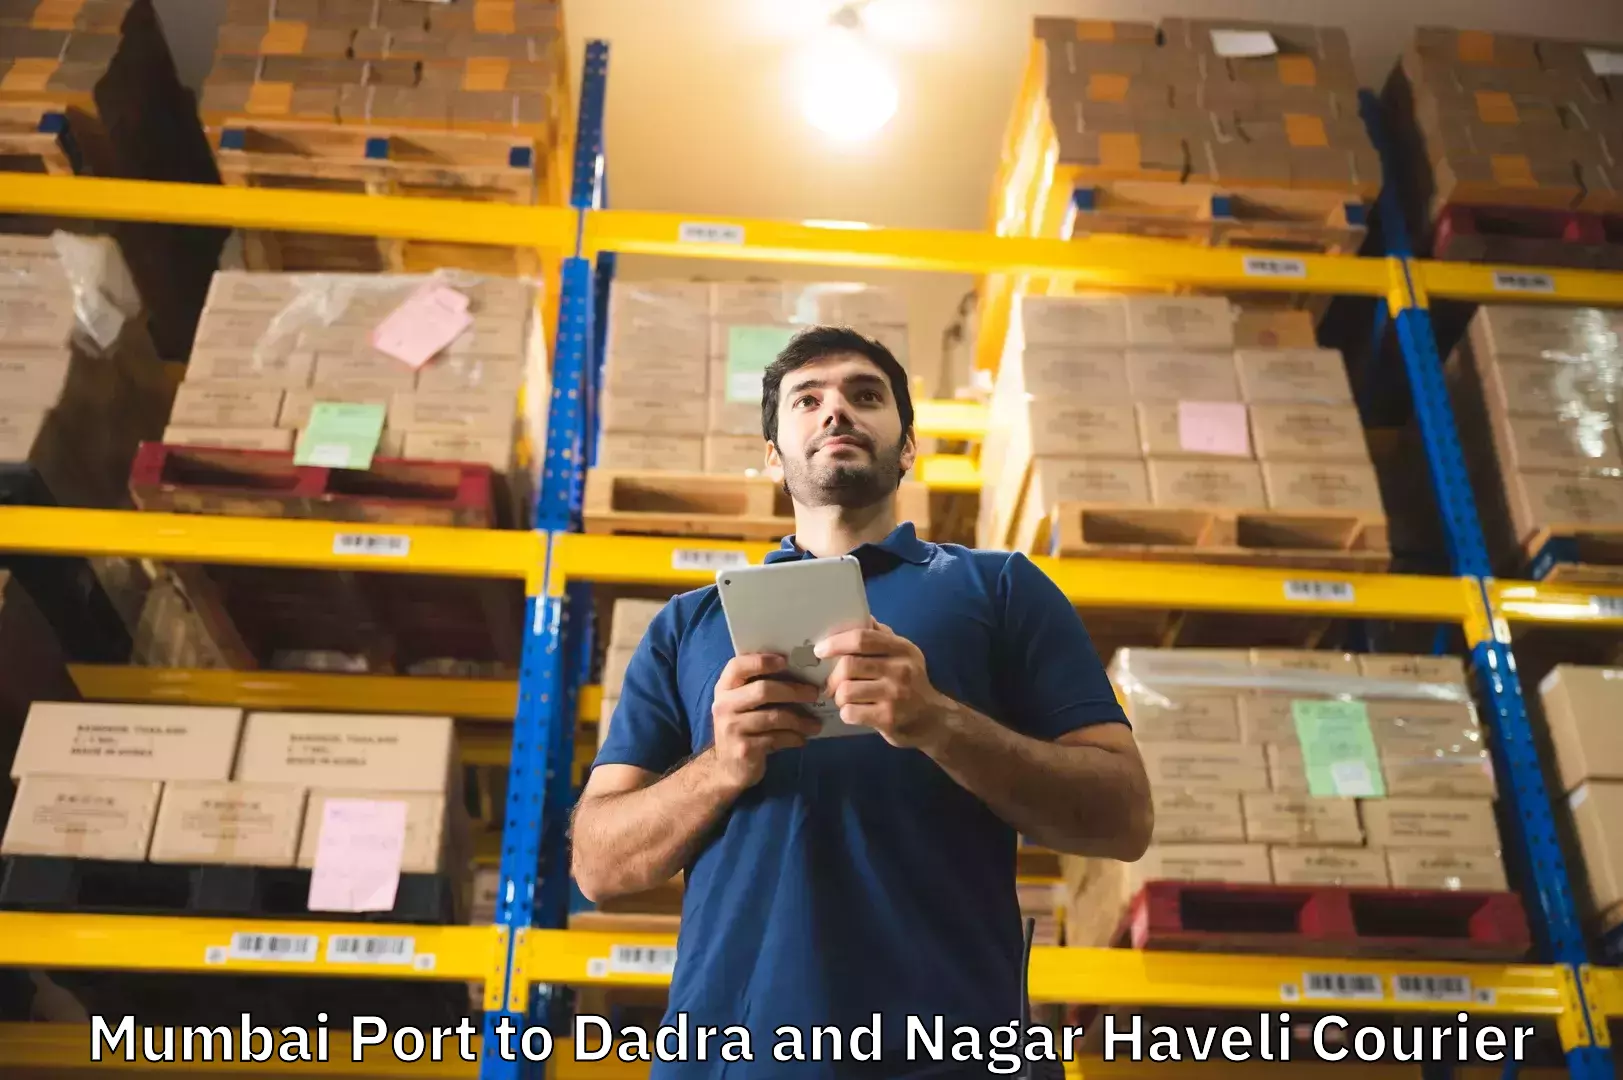 Personal effects shipping Mumbai Port to Dadra and Nagar Haveli